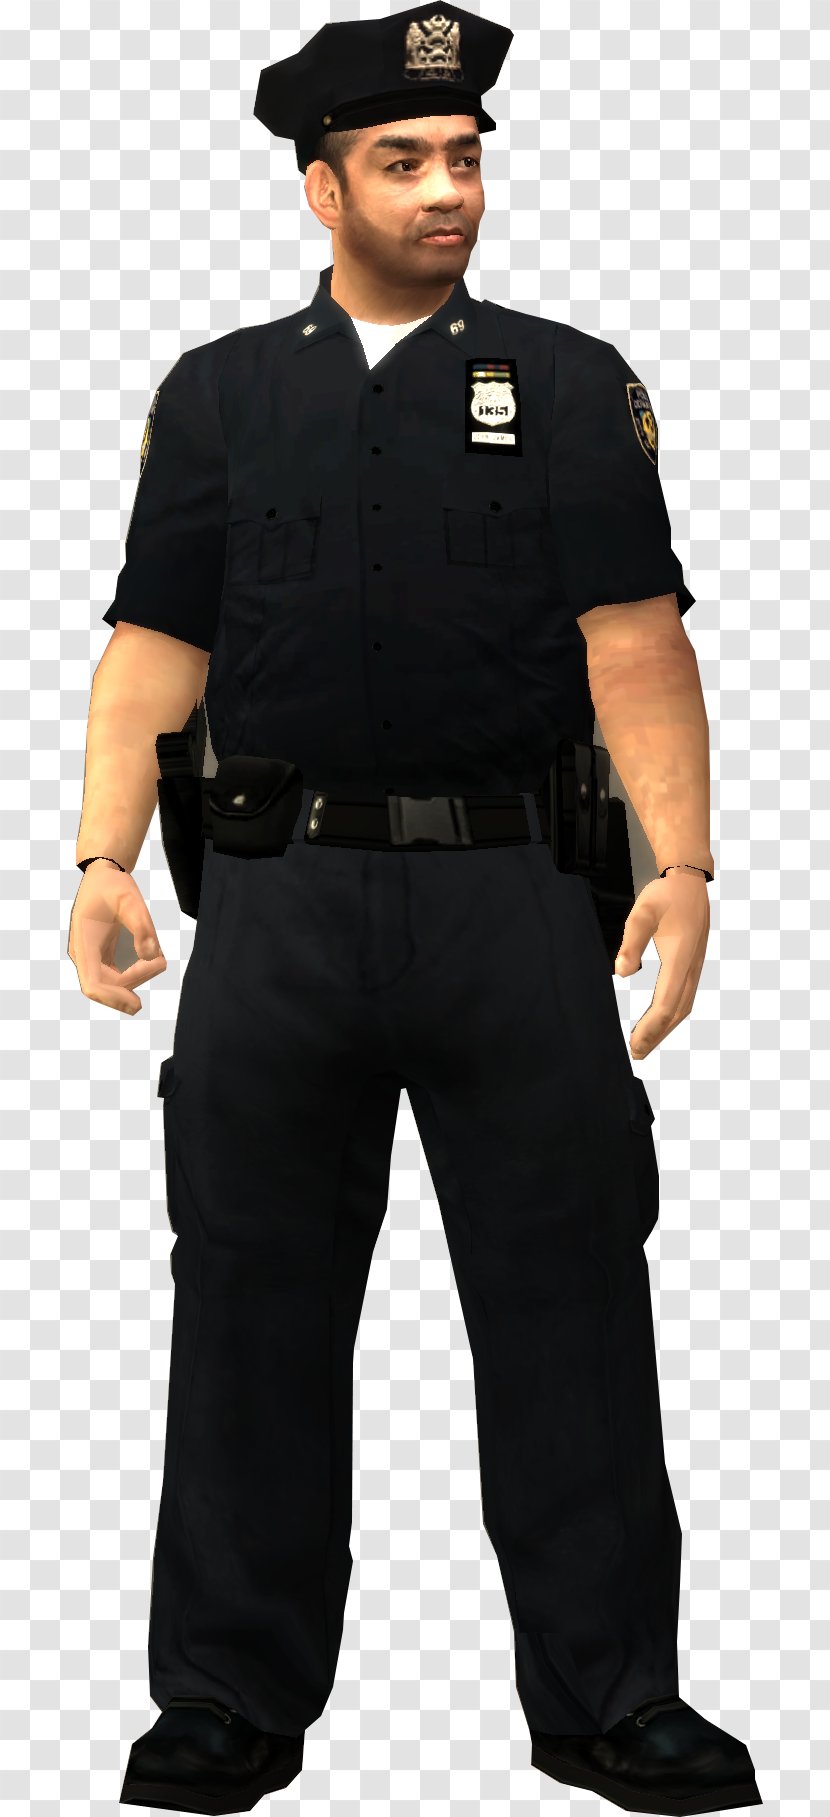 Grand Theft Auto V IV Police Officer - Military Uniform - Policeman Transparent PNG